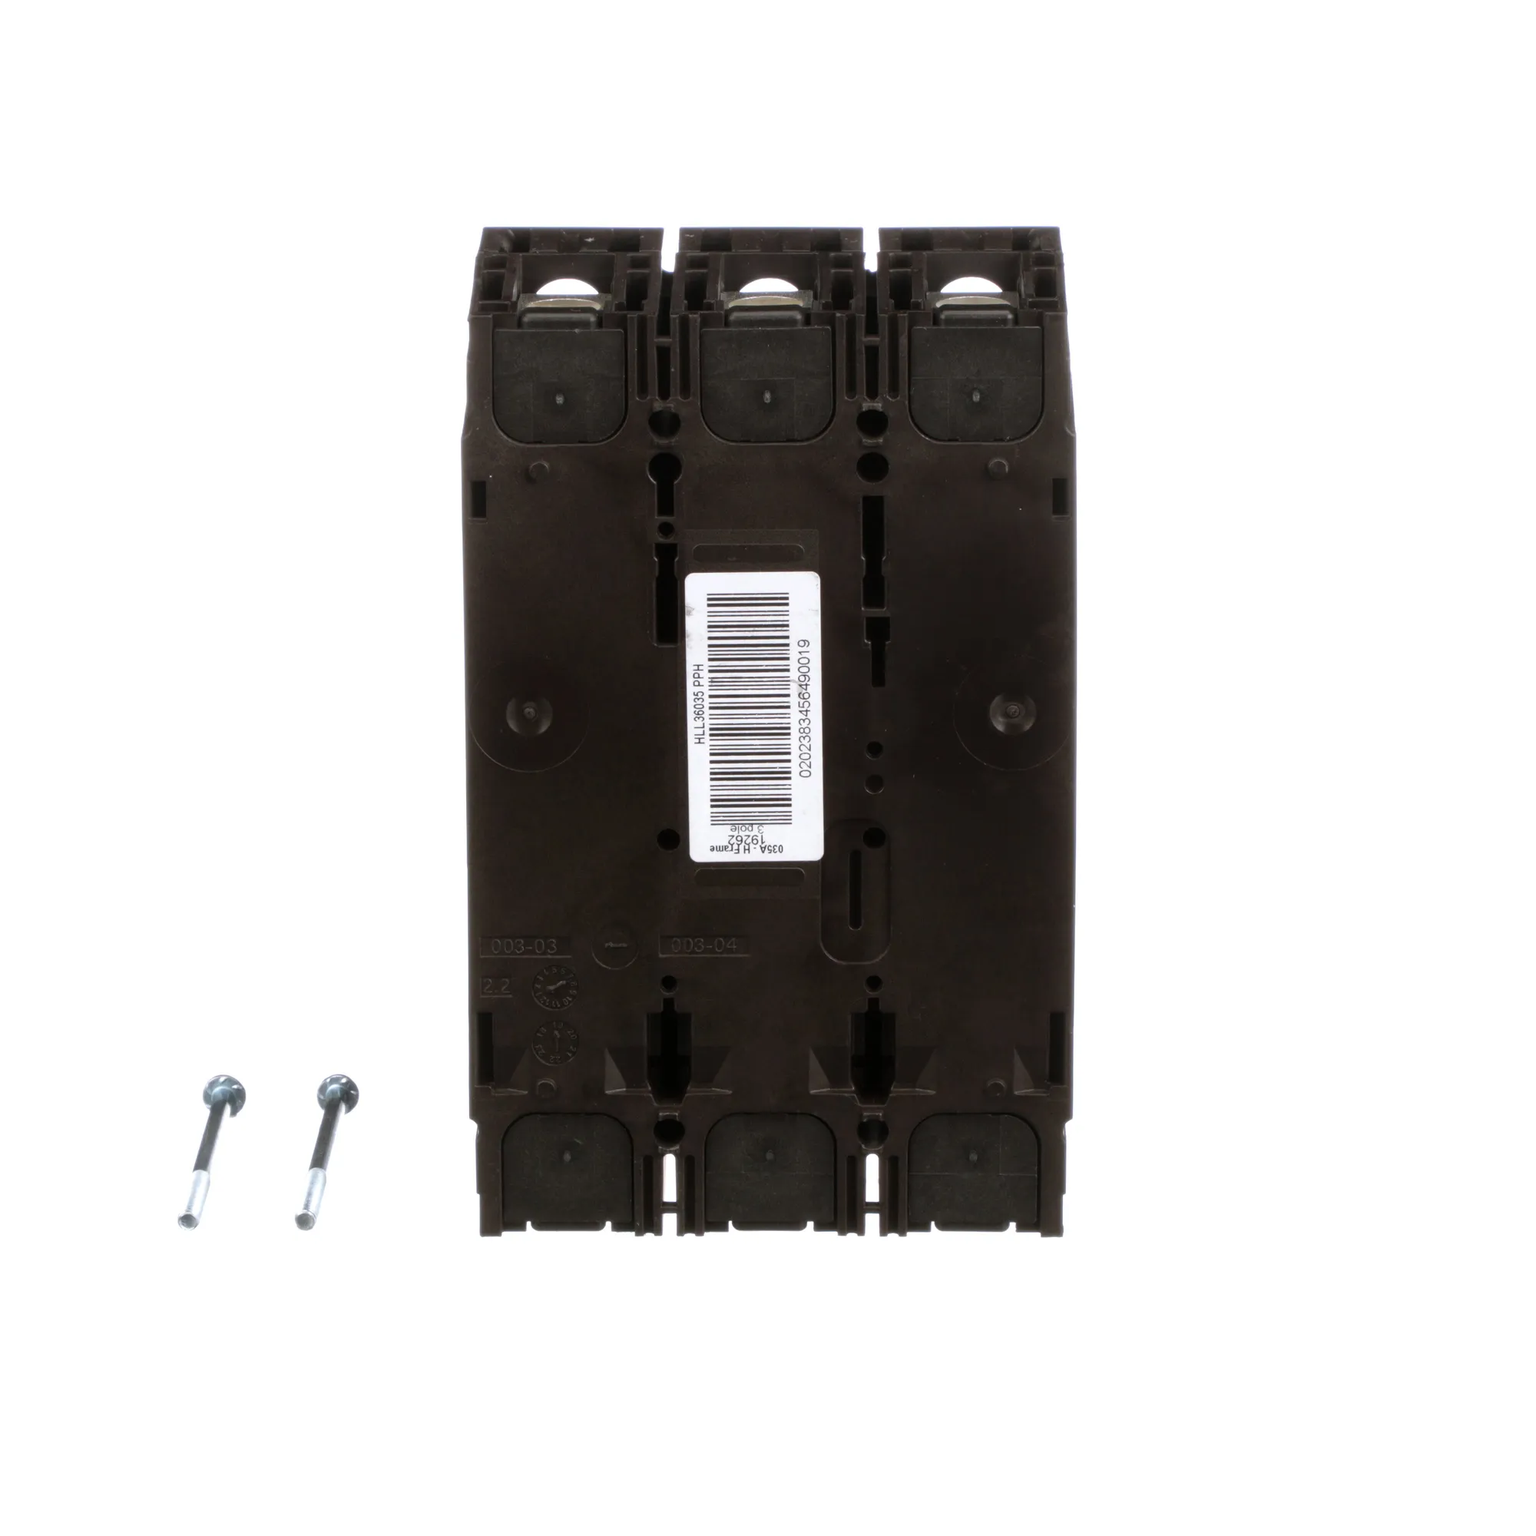 HLL36035 - Square D - 35 Amp Molded Case Circuit Breaker